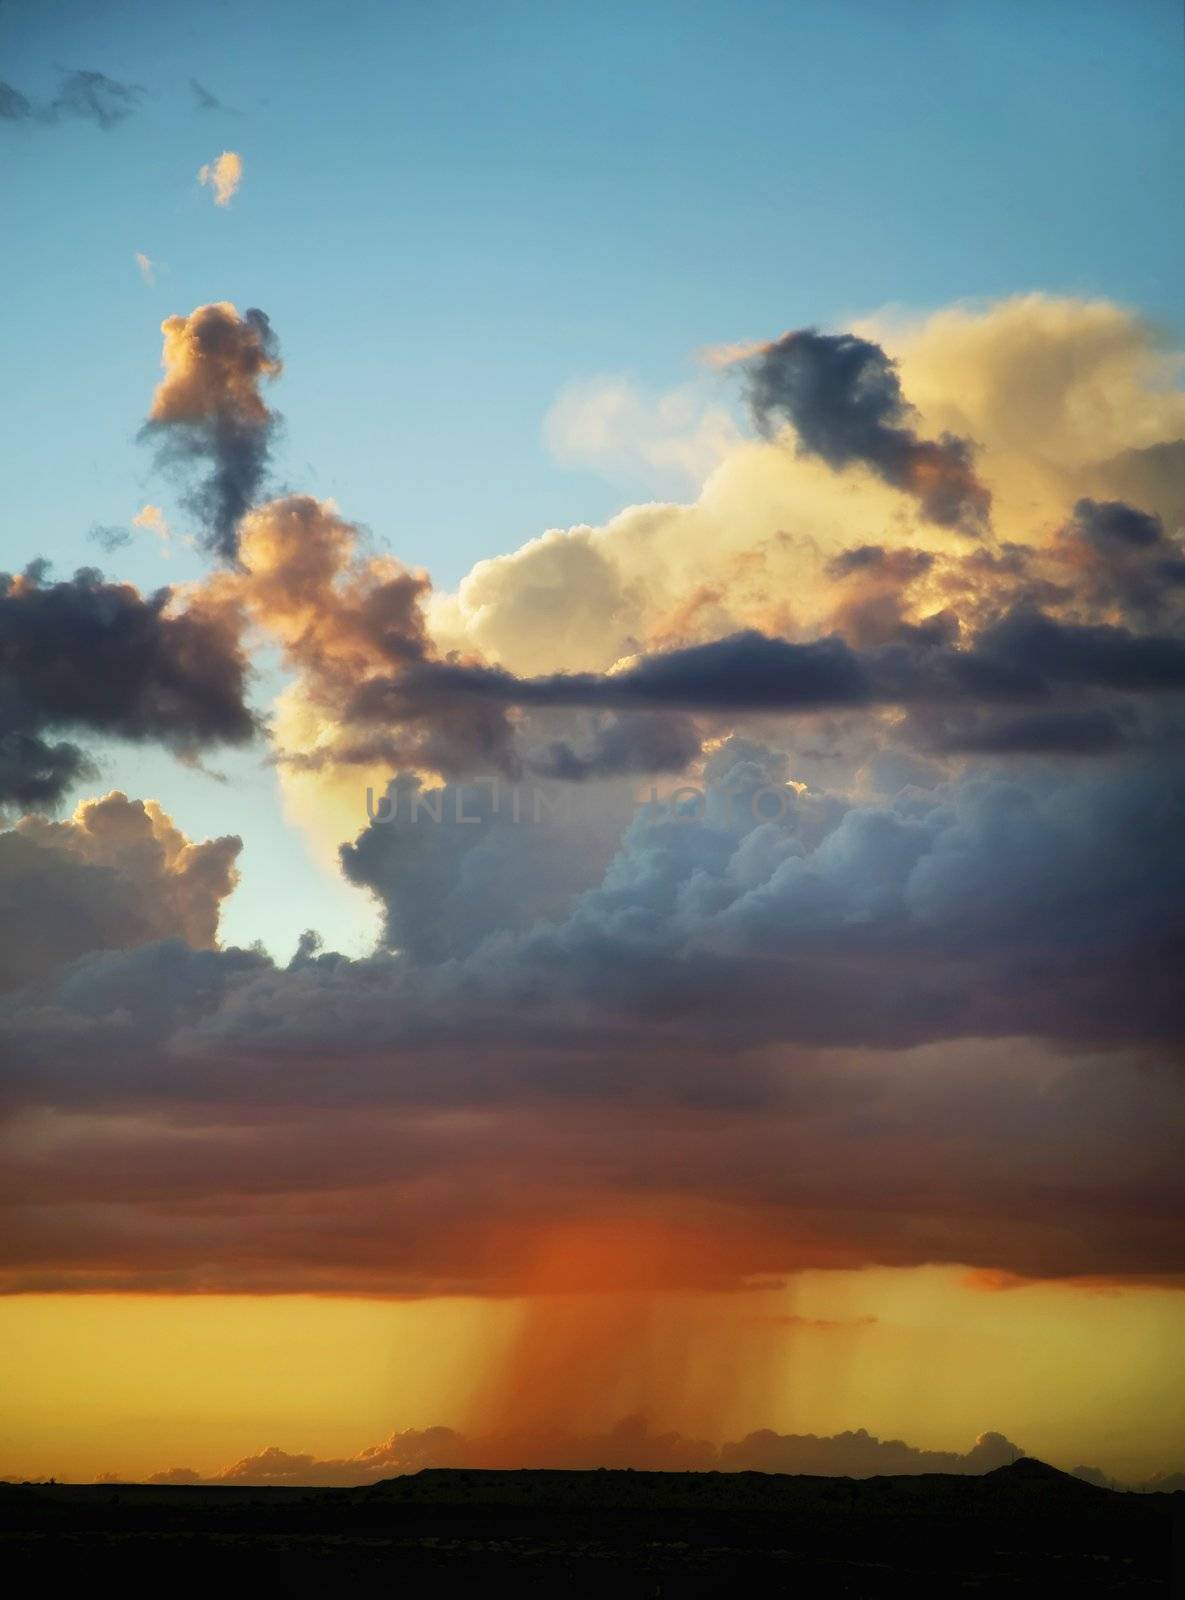 A distance rain cloud at sunset underneath a blue sky.